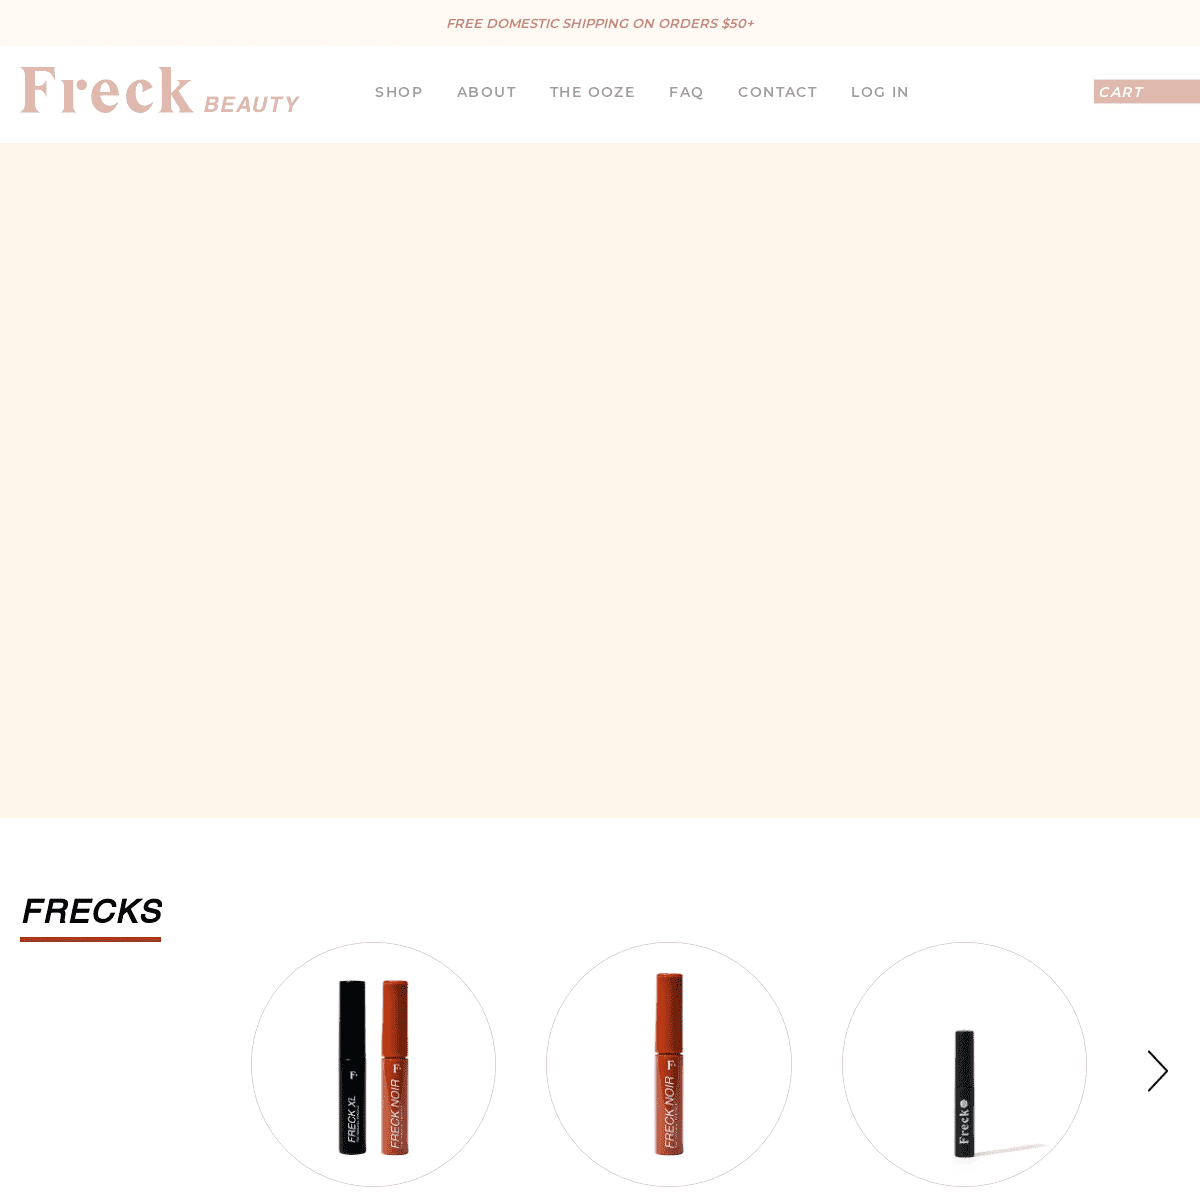 A complete backup of https://freckbeauty.com